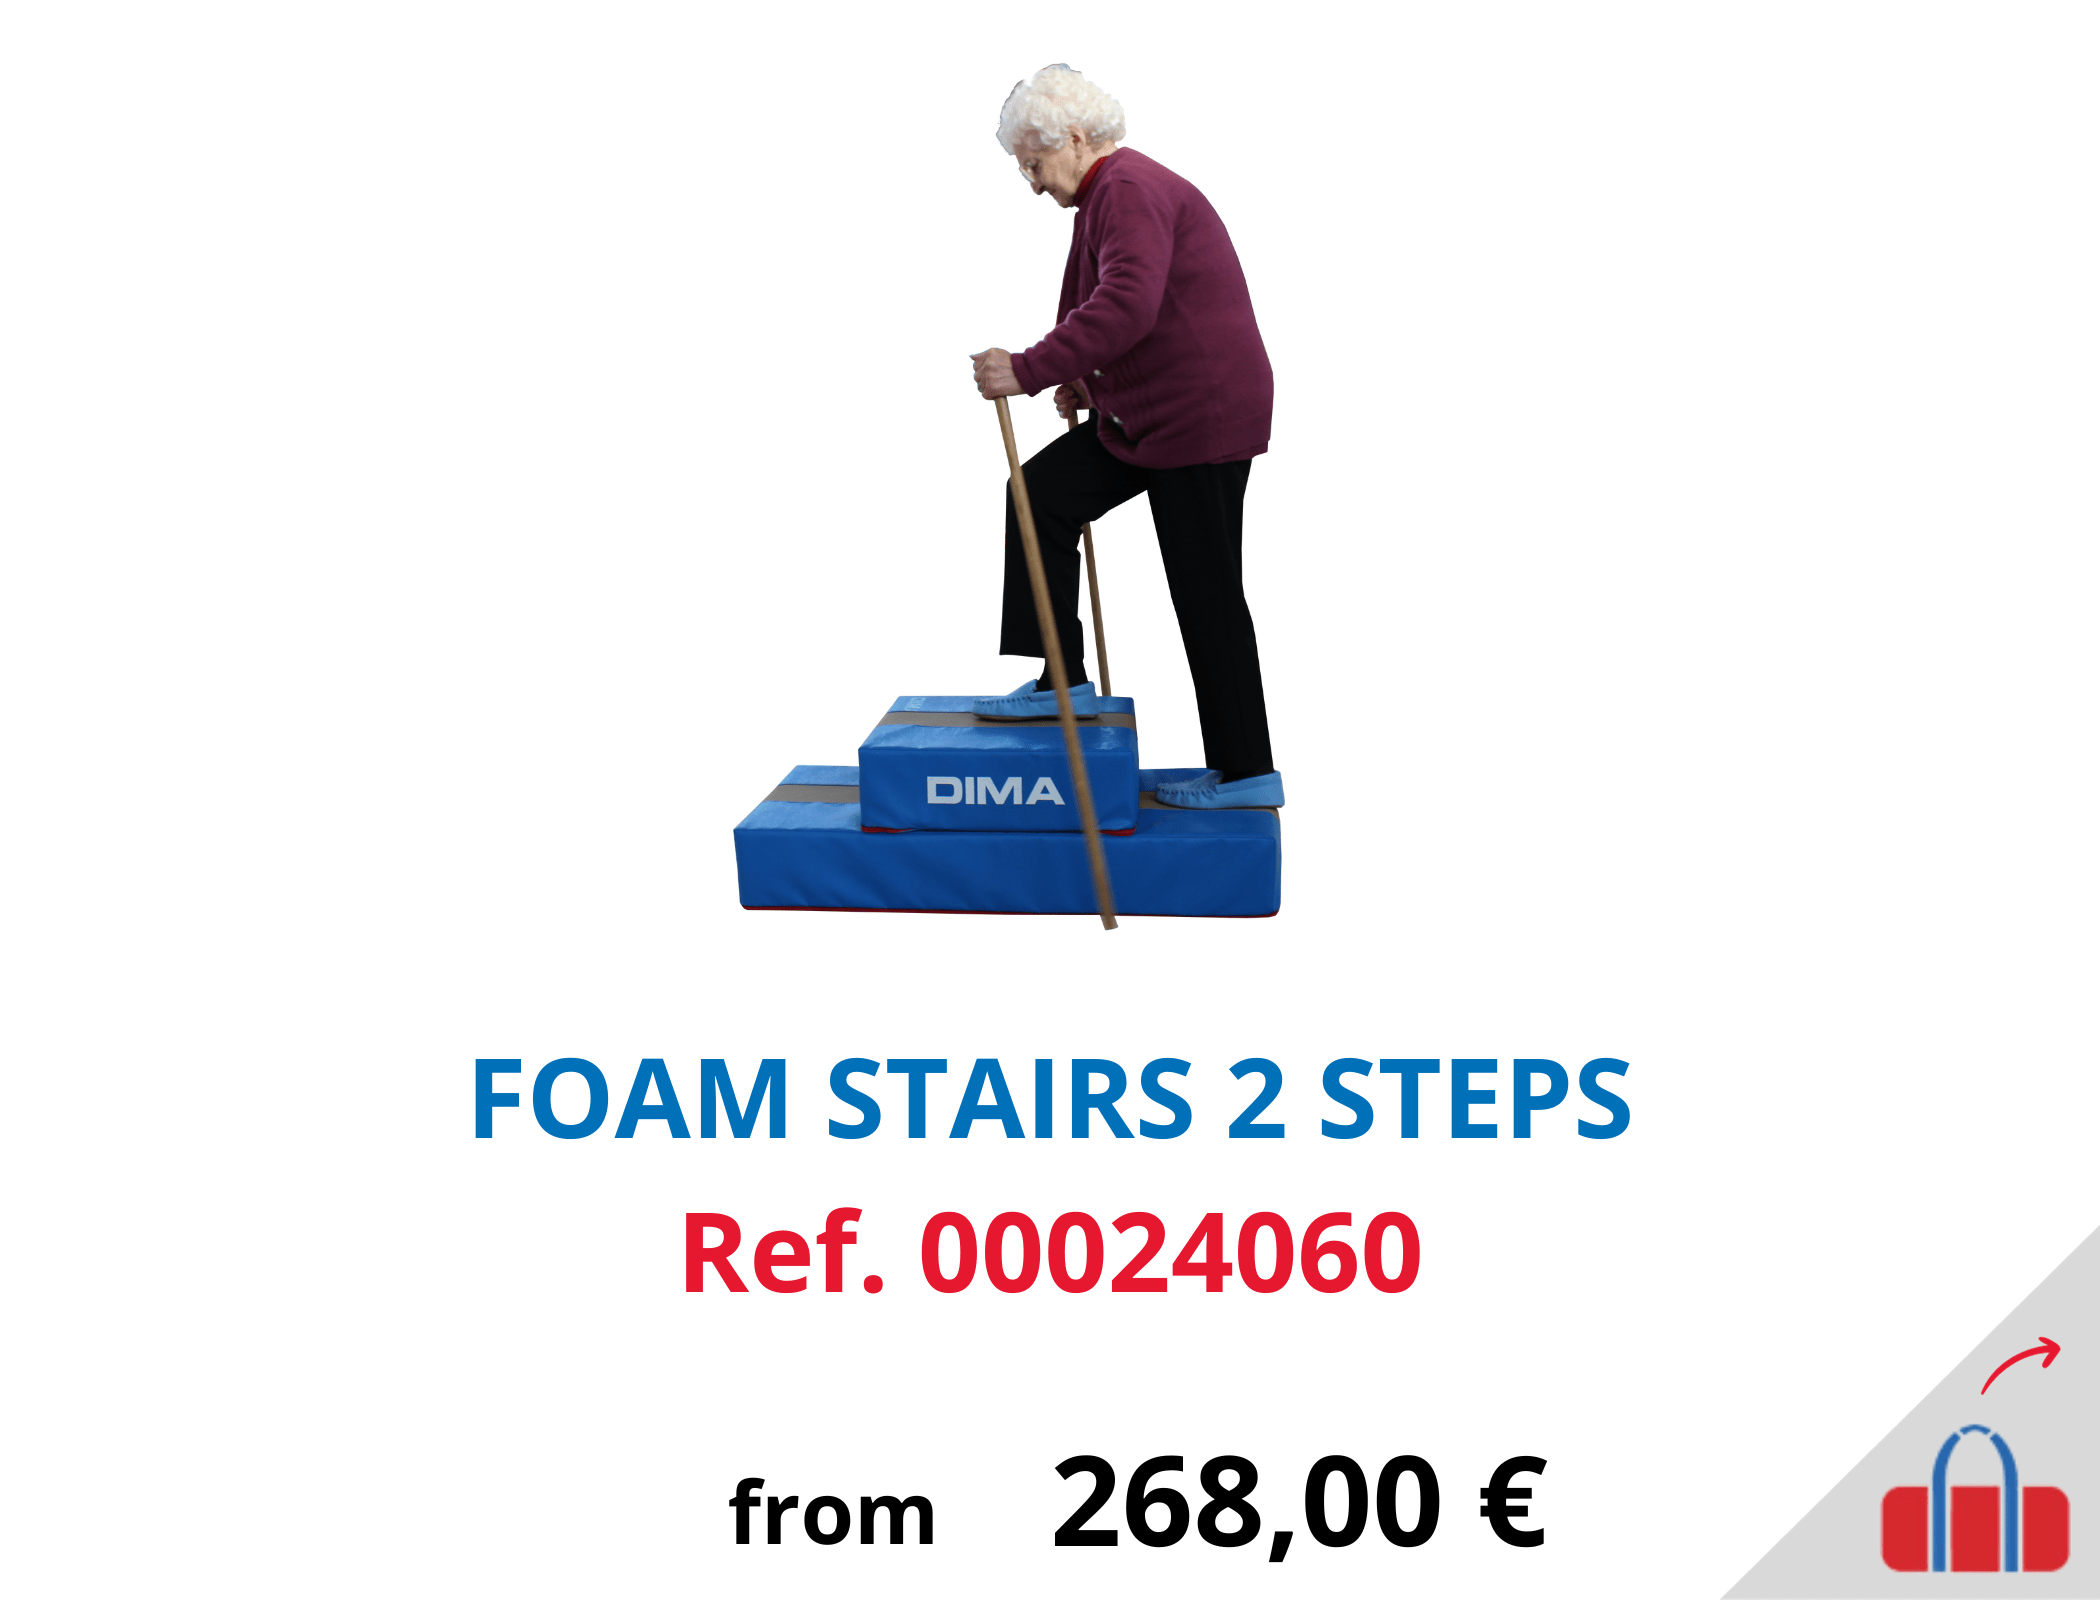 Foam stairs